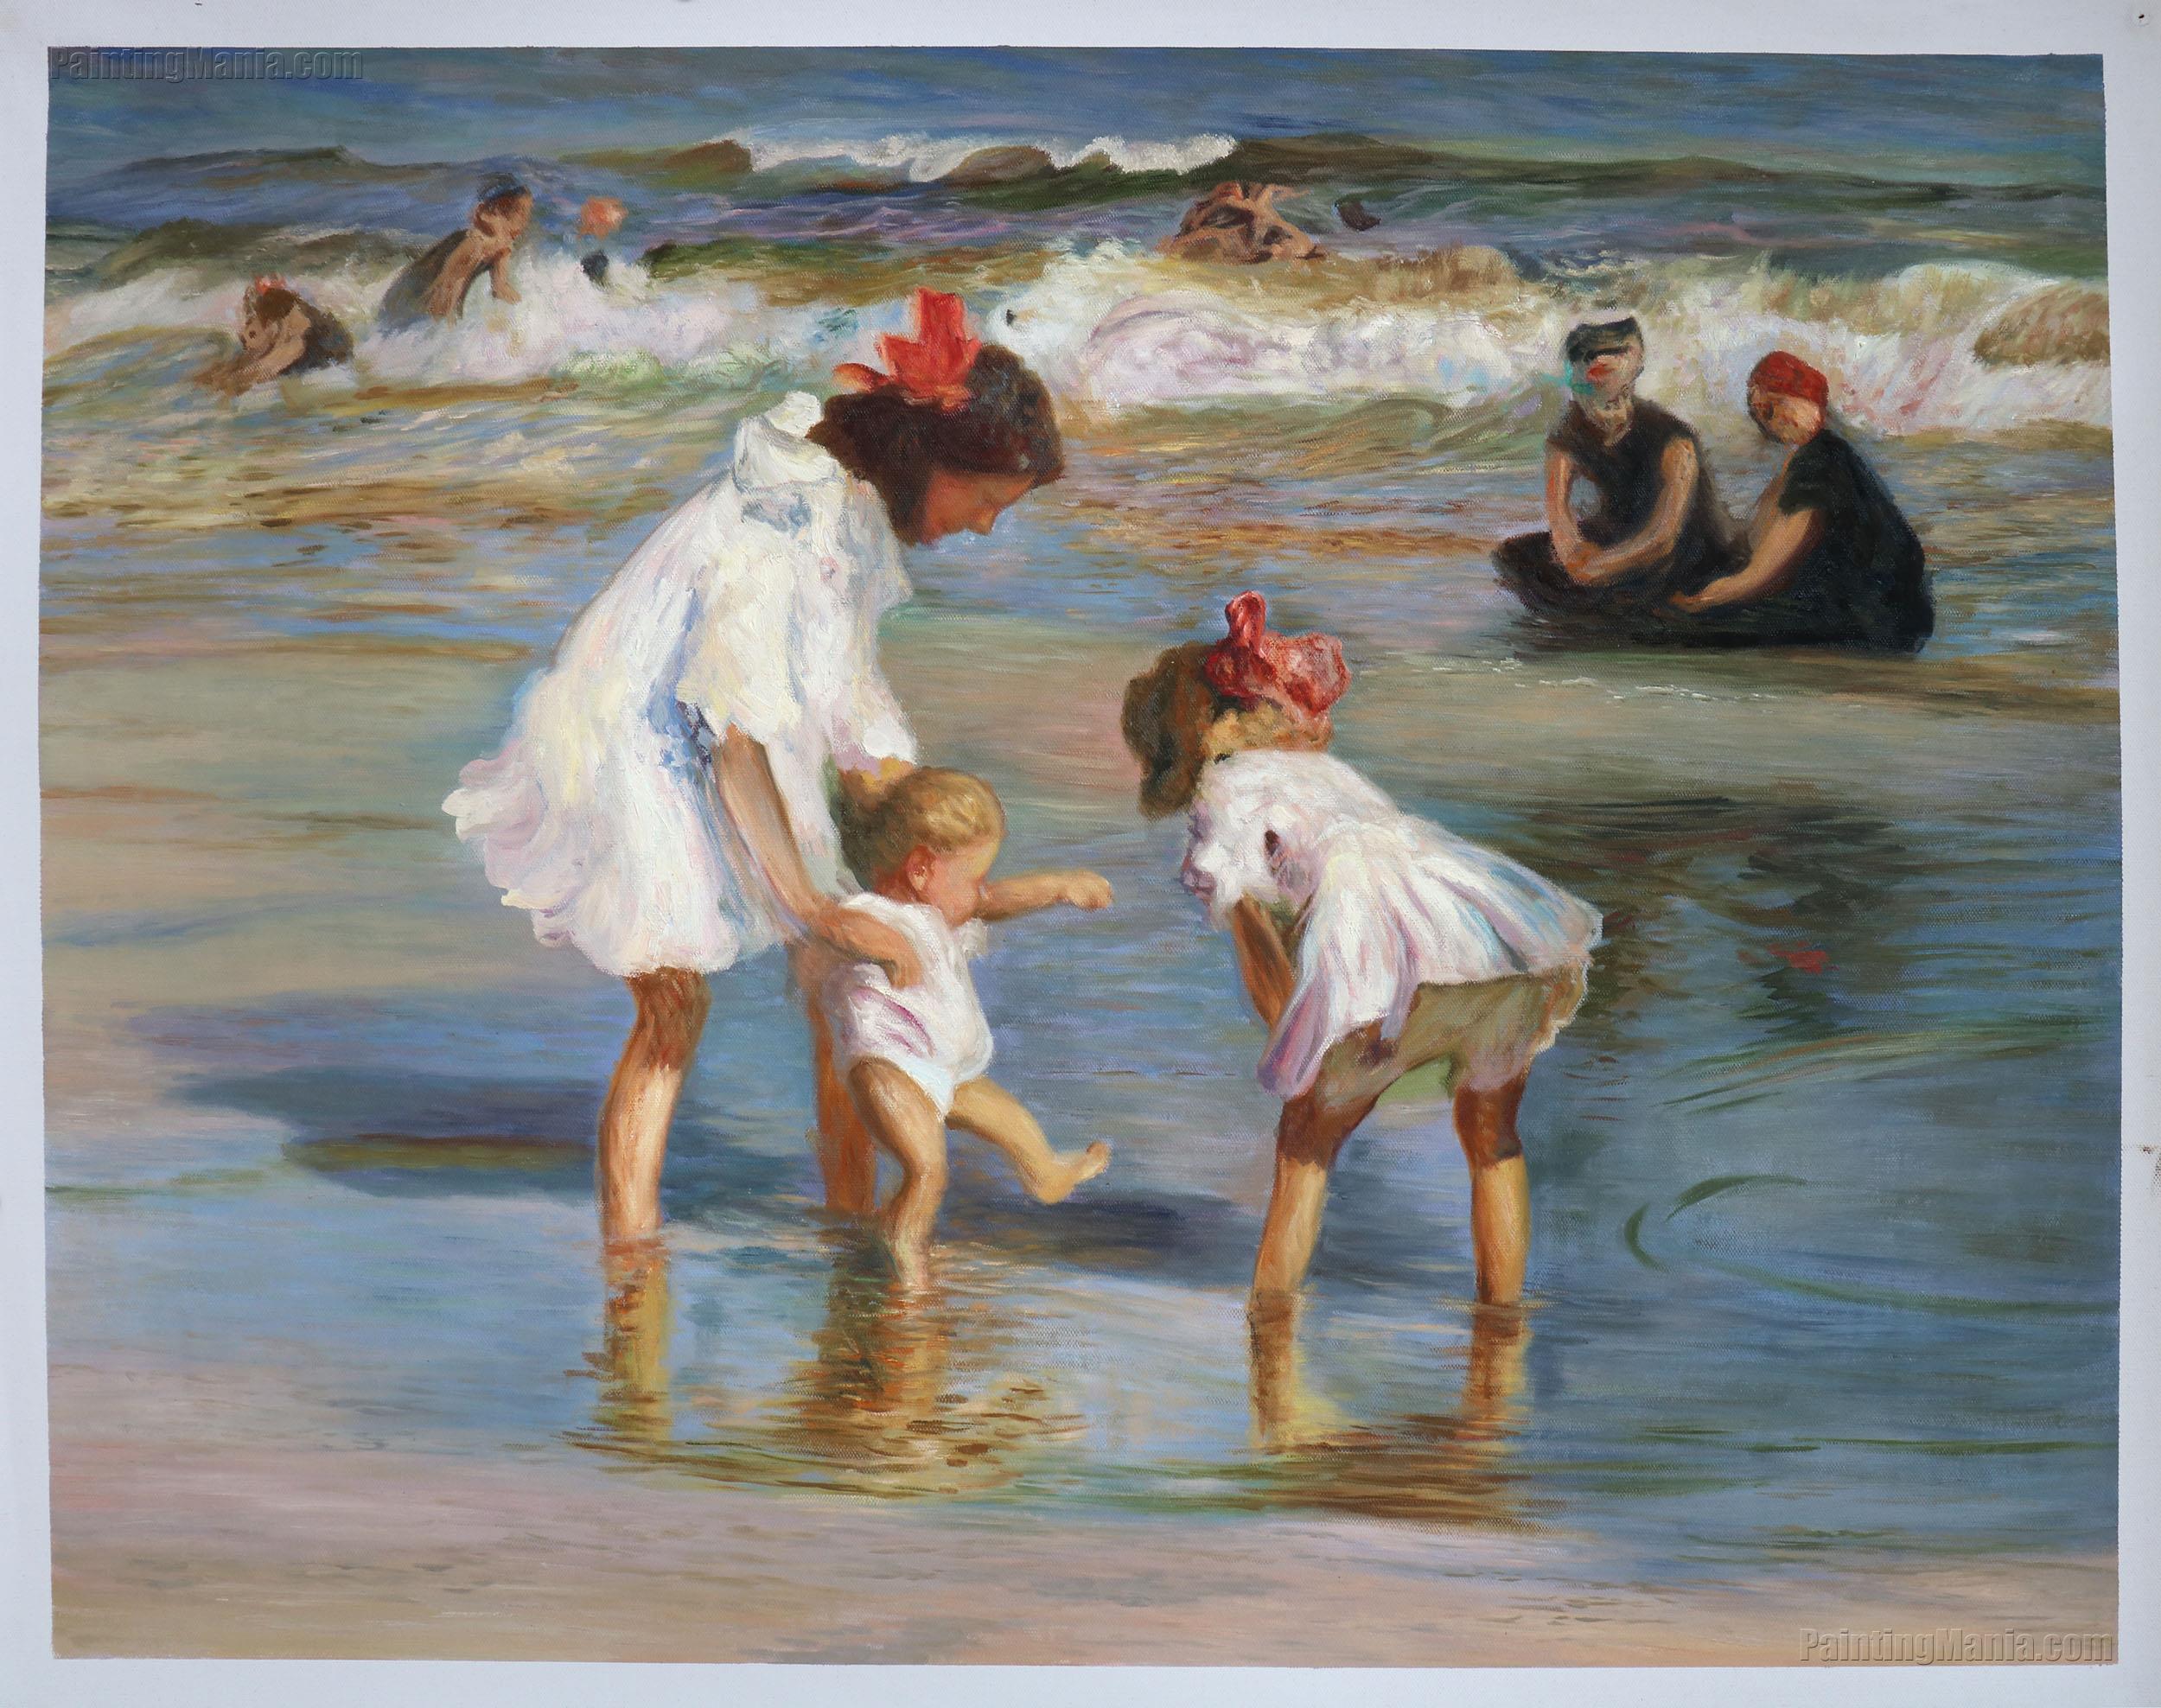 Children Playing at the Seashore Historic Photo Print 1905